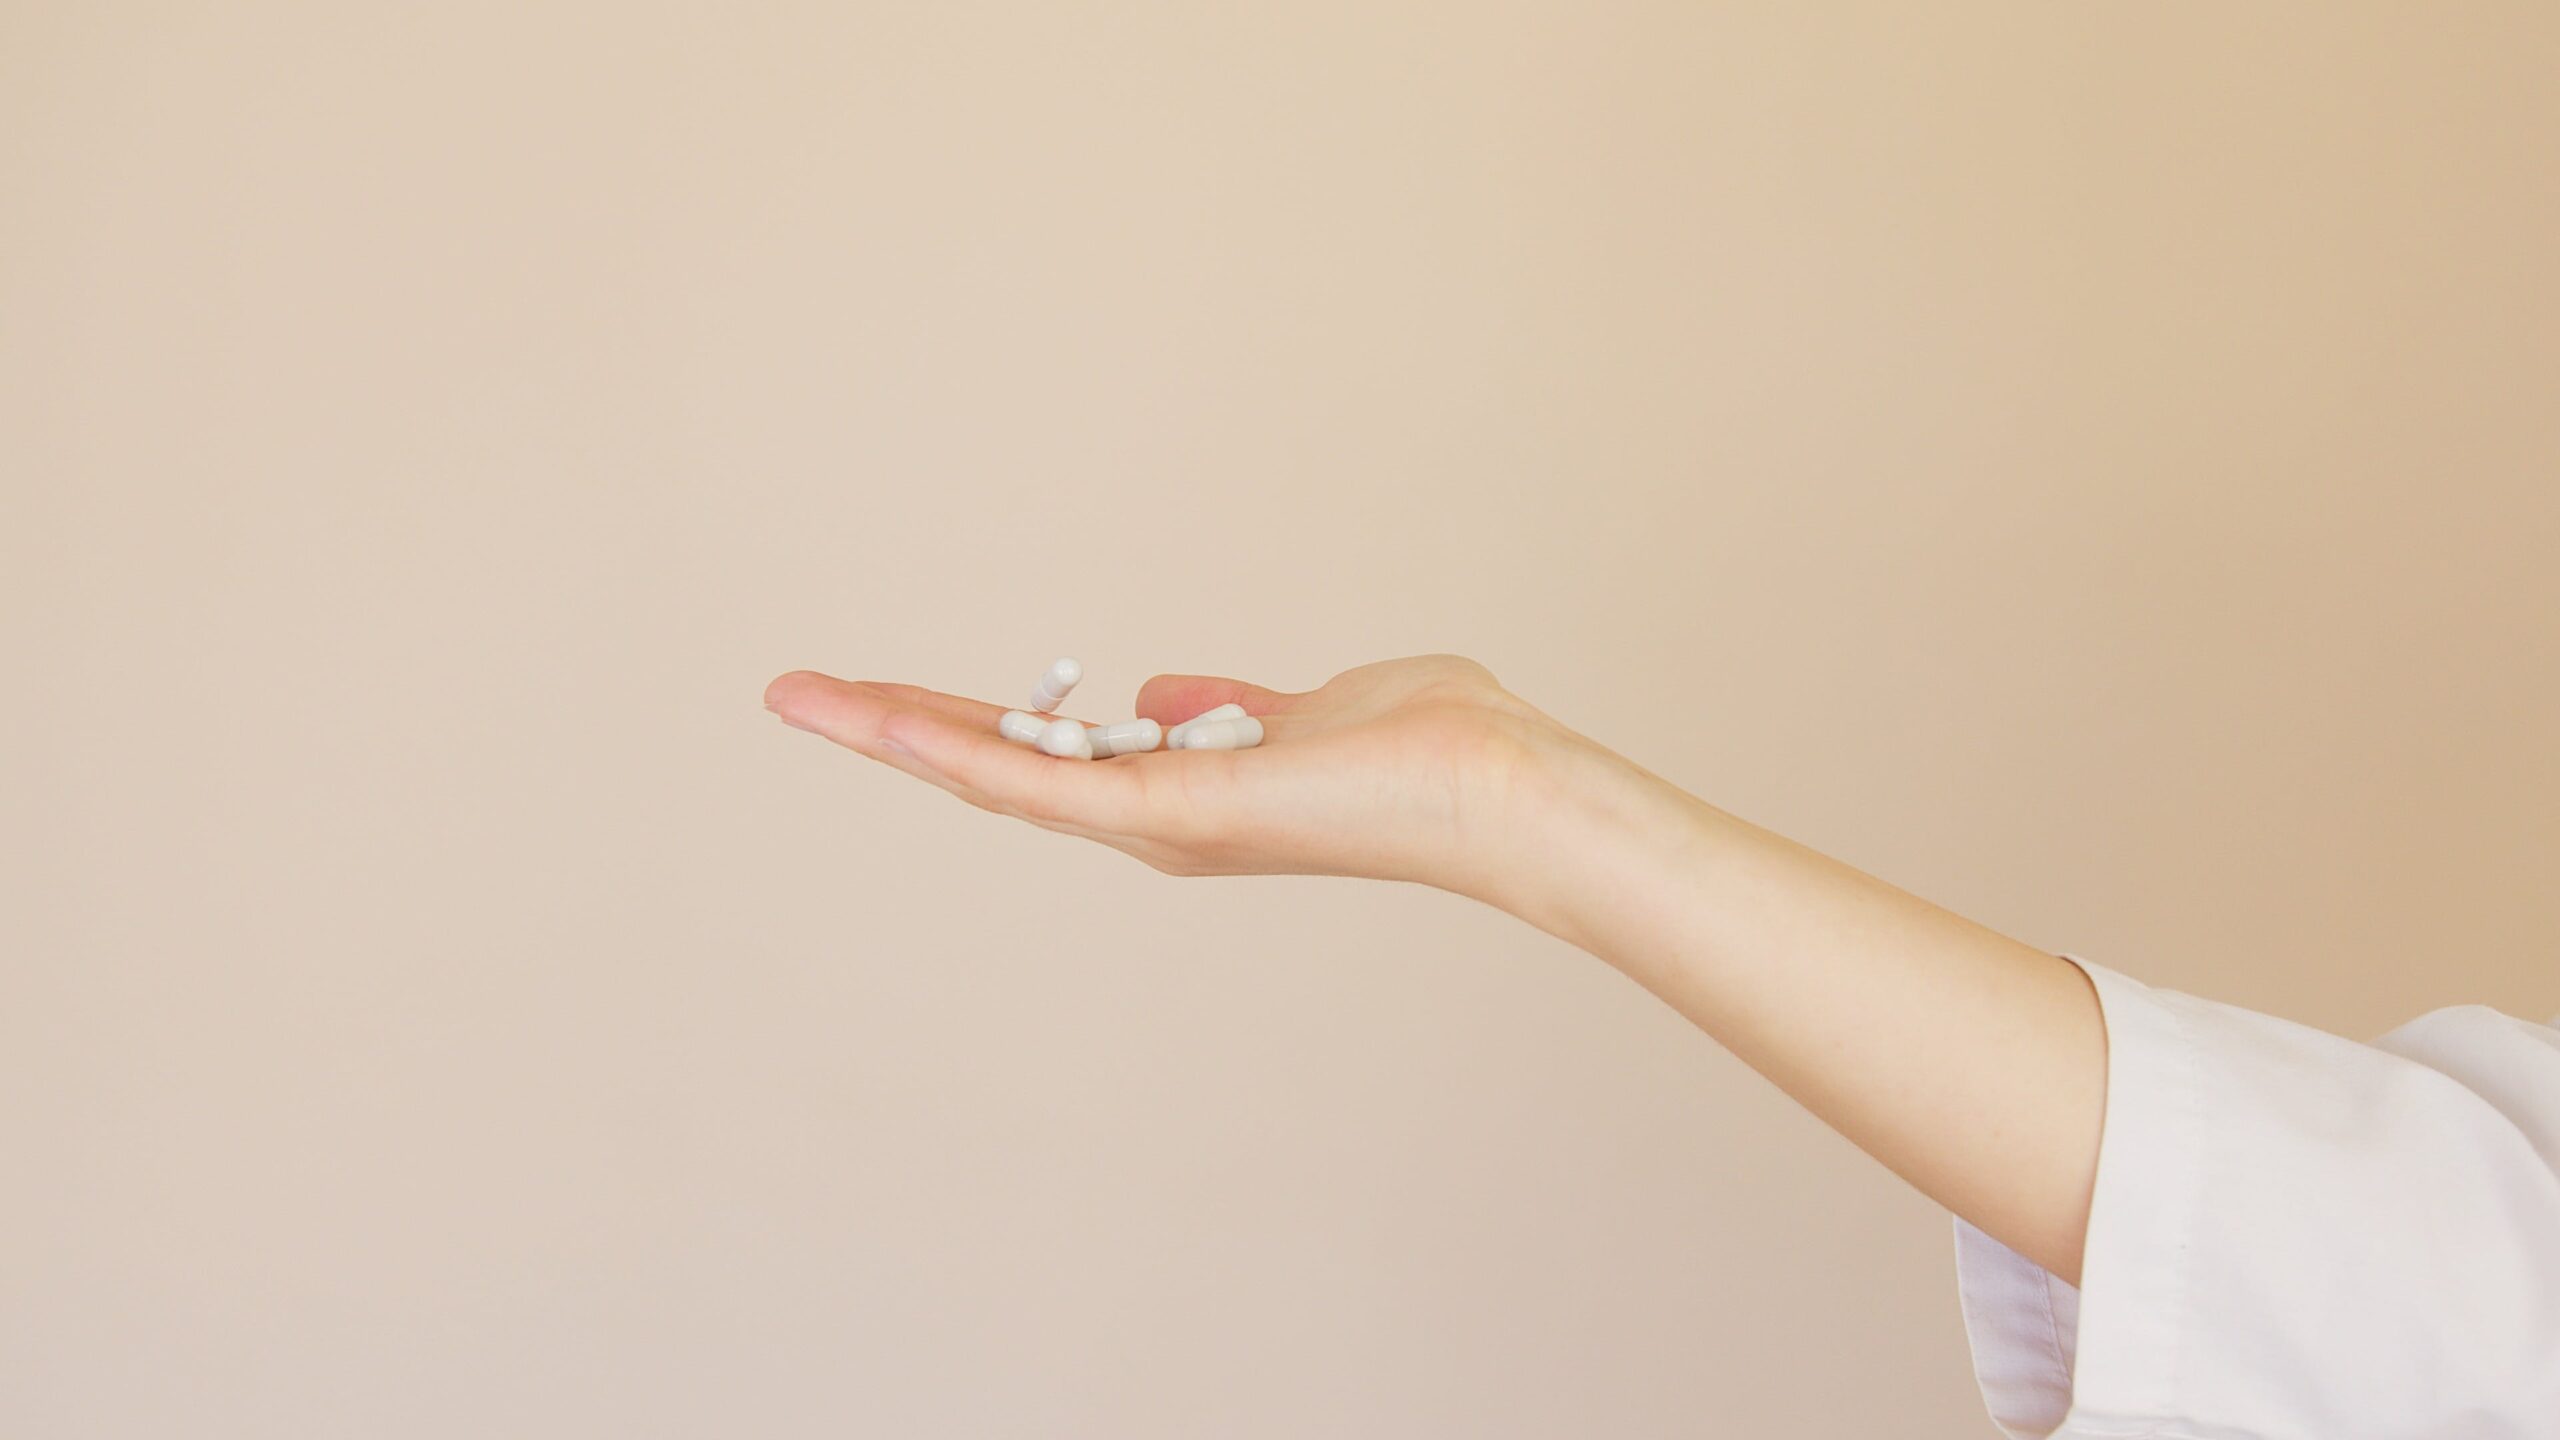 White pills on a palm